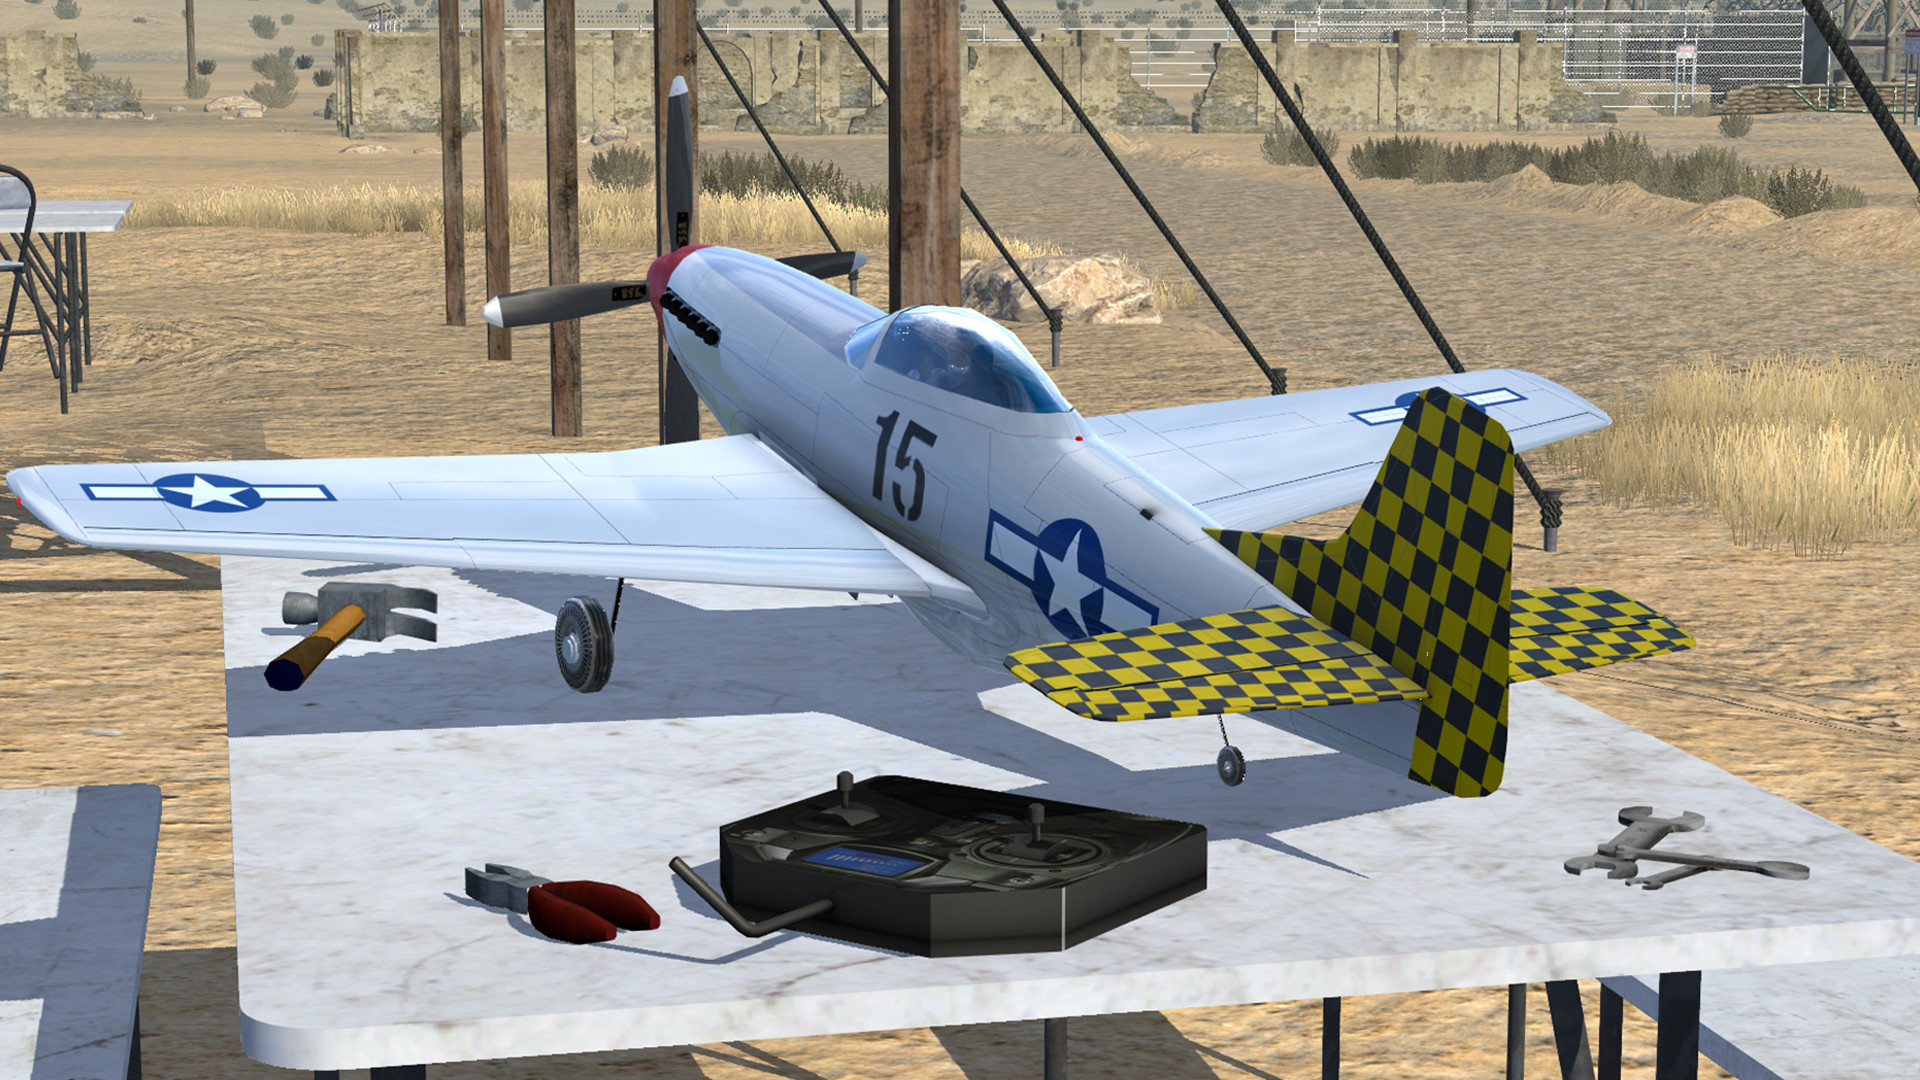 rc simulator aircraft